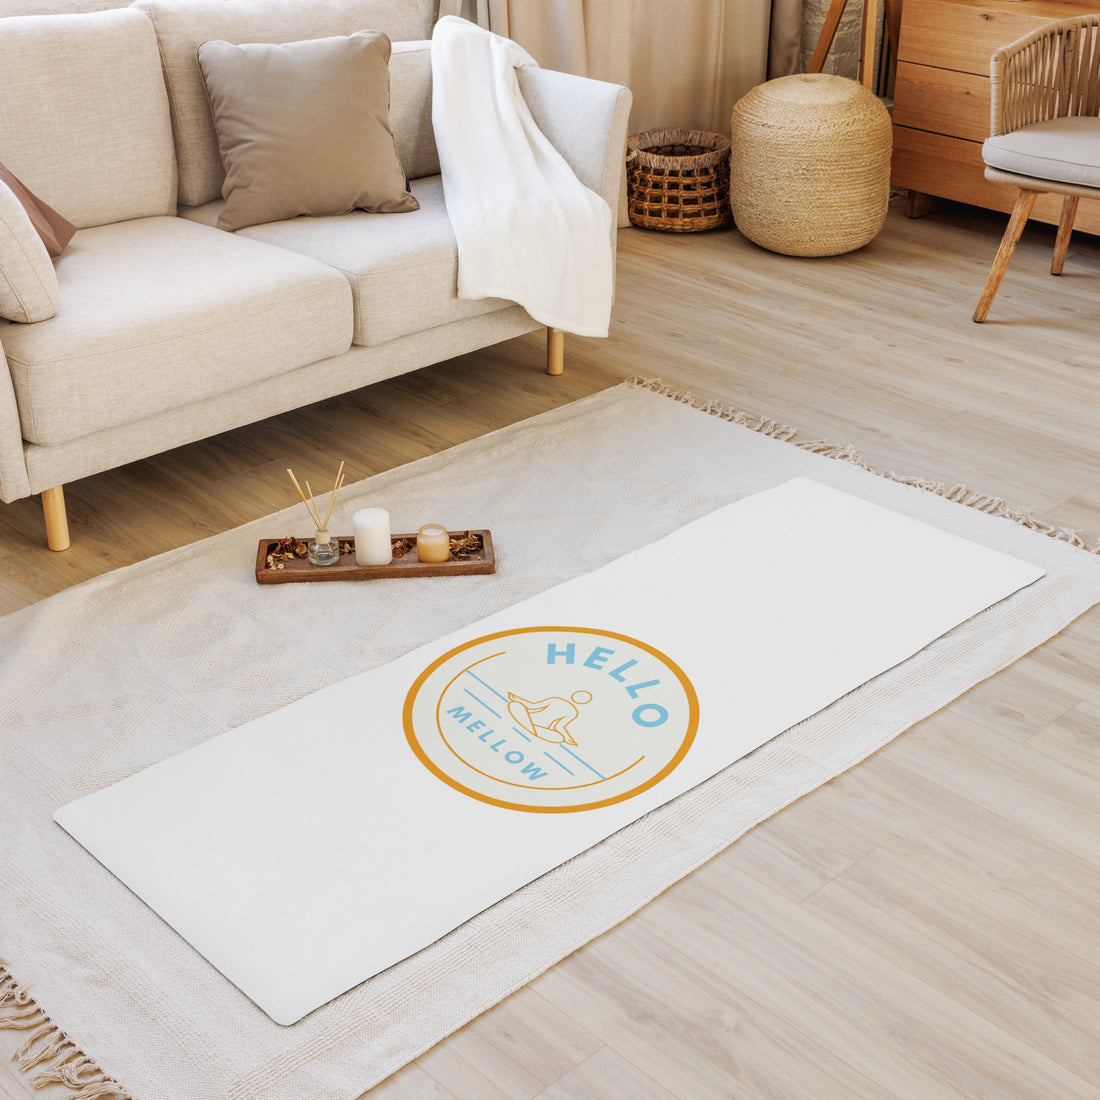 HELLOMELLOW Zen White Yoga Mat